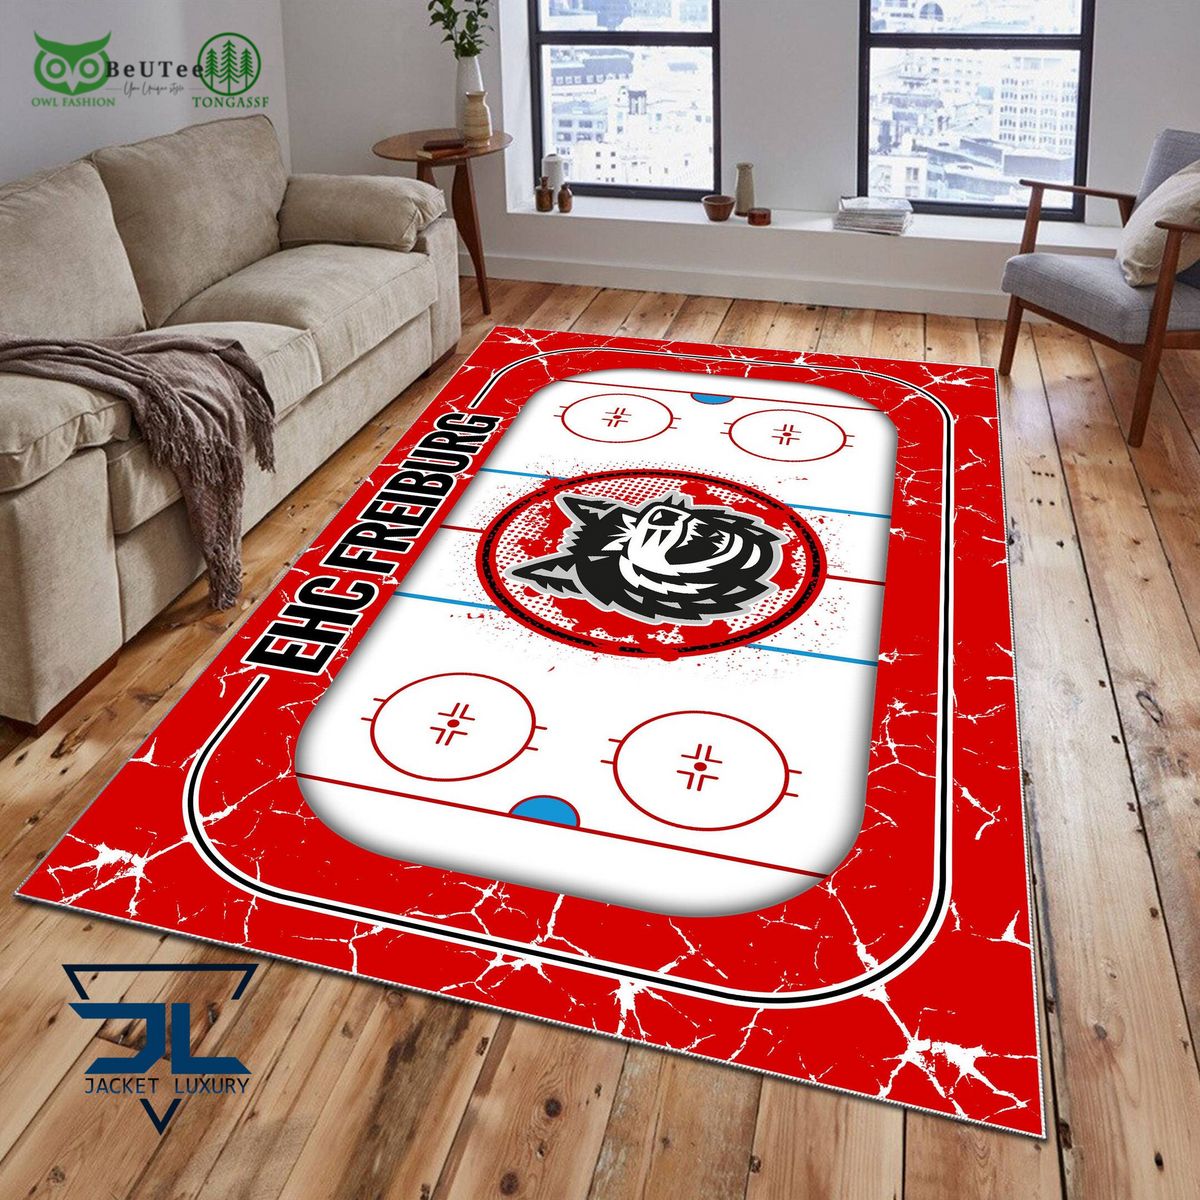 ehc freiburg germany ice hockey team carpet rug 1 macAH